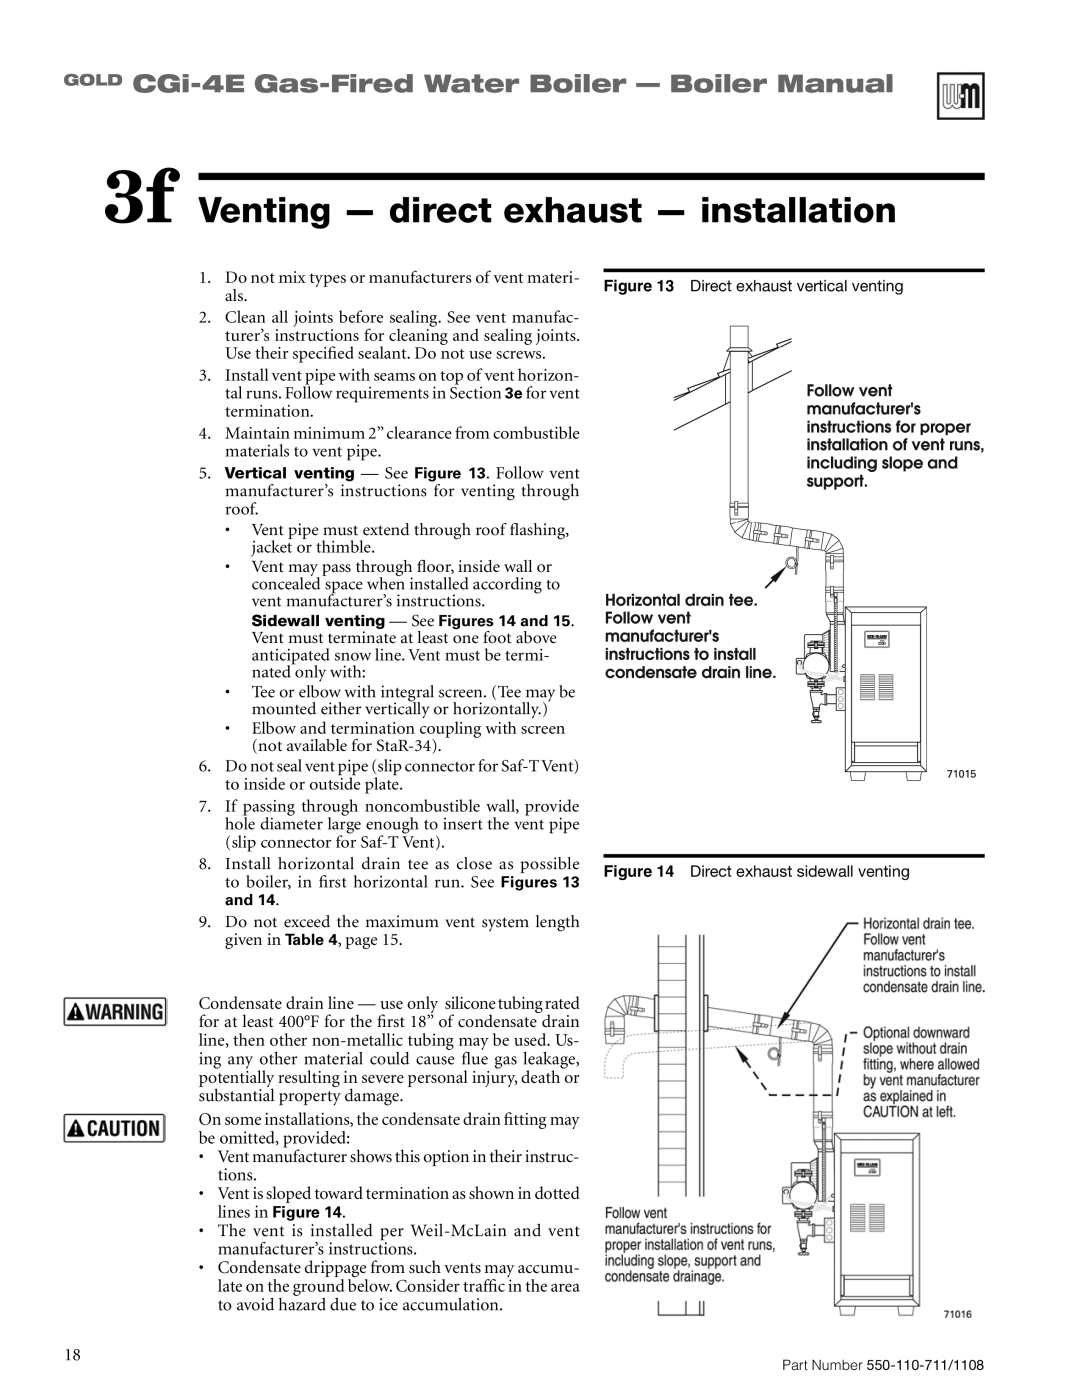 Weil-McLain CGI-4E manual 3f Venting - direct exhaust - installation, GOLD CGi-4E Gas-FiredWater Boiler - Boiler Manual 